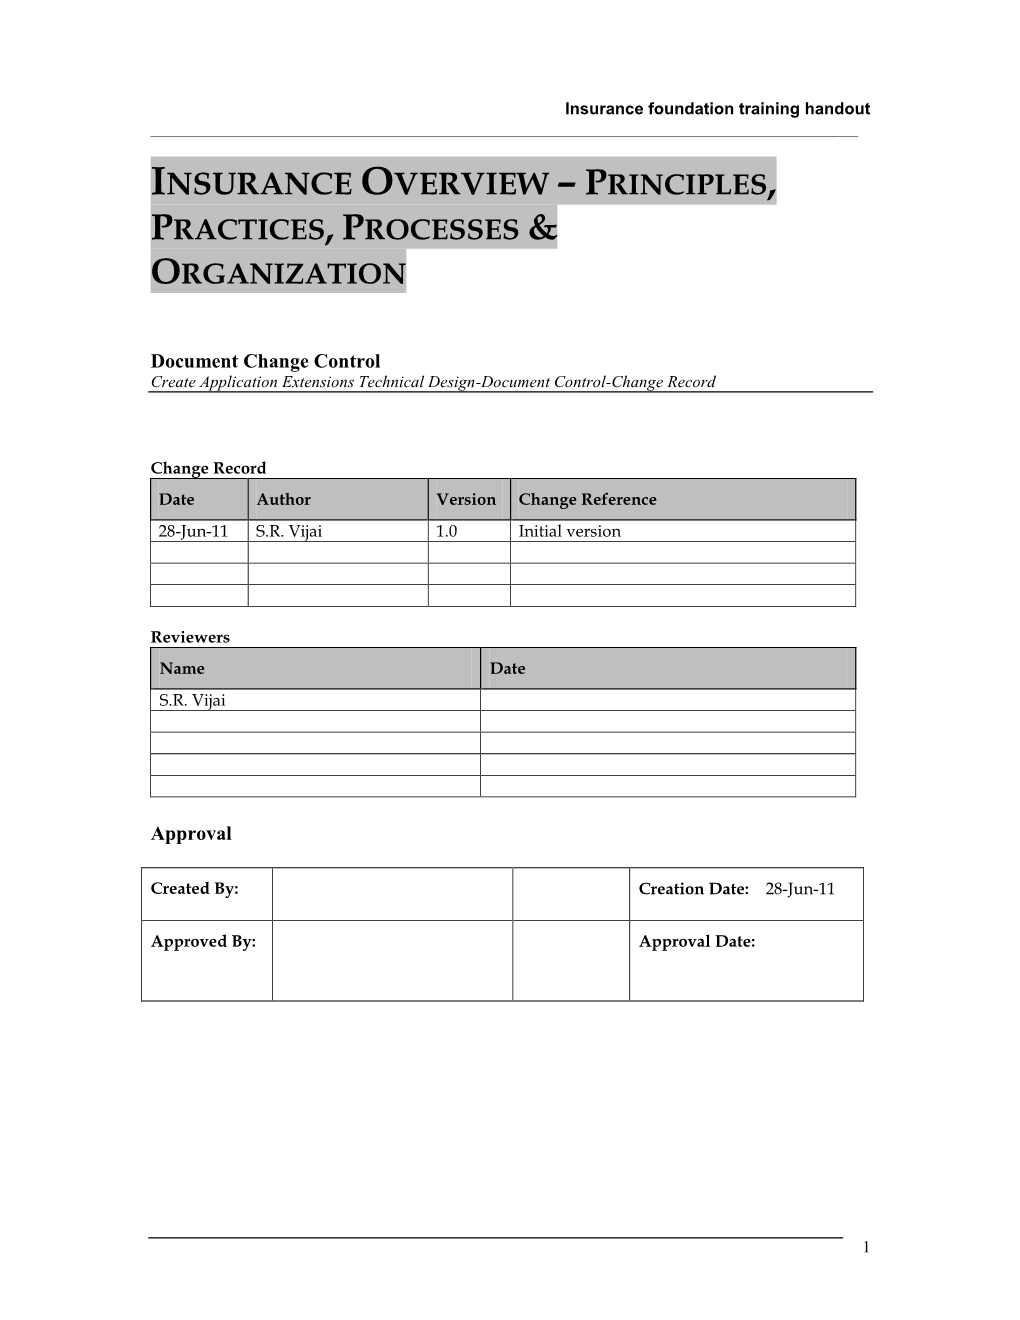 Insurance Overview – Principles, Practices, Processes & Organization